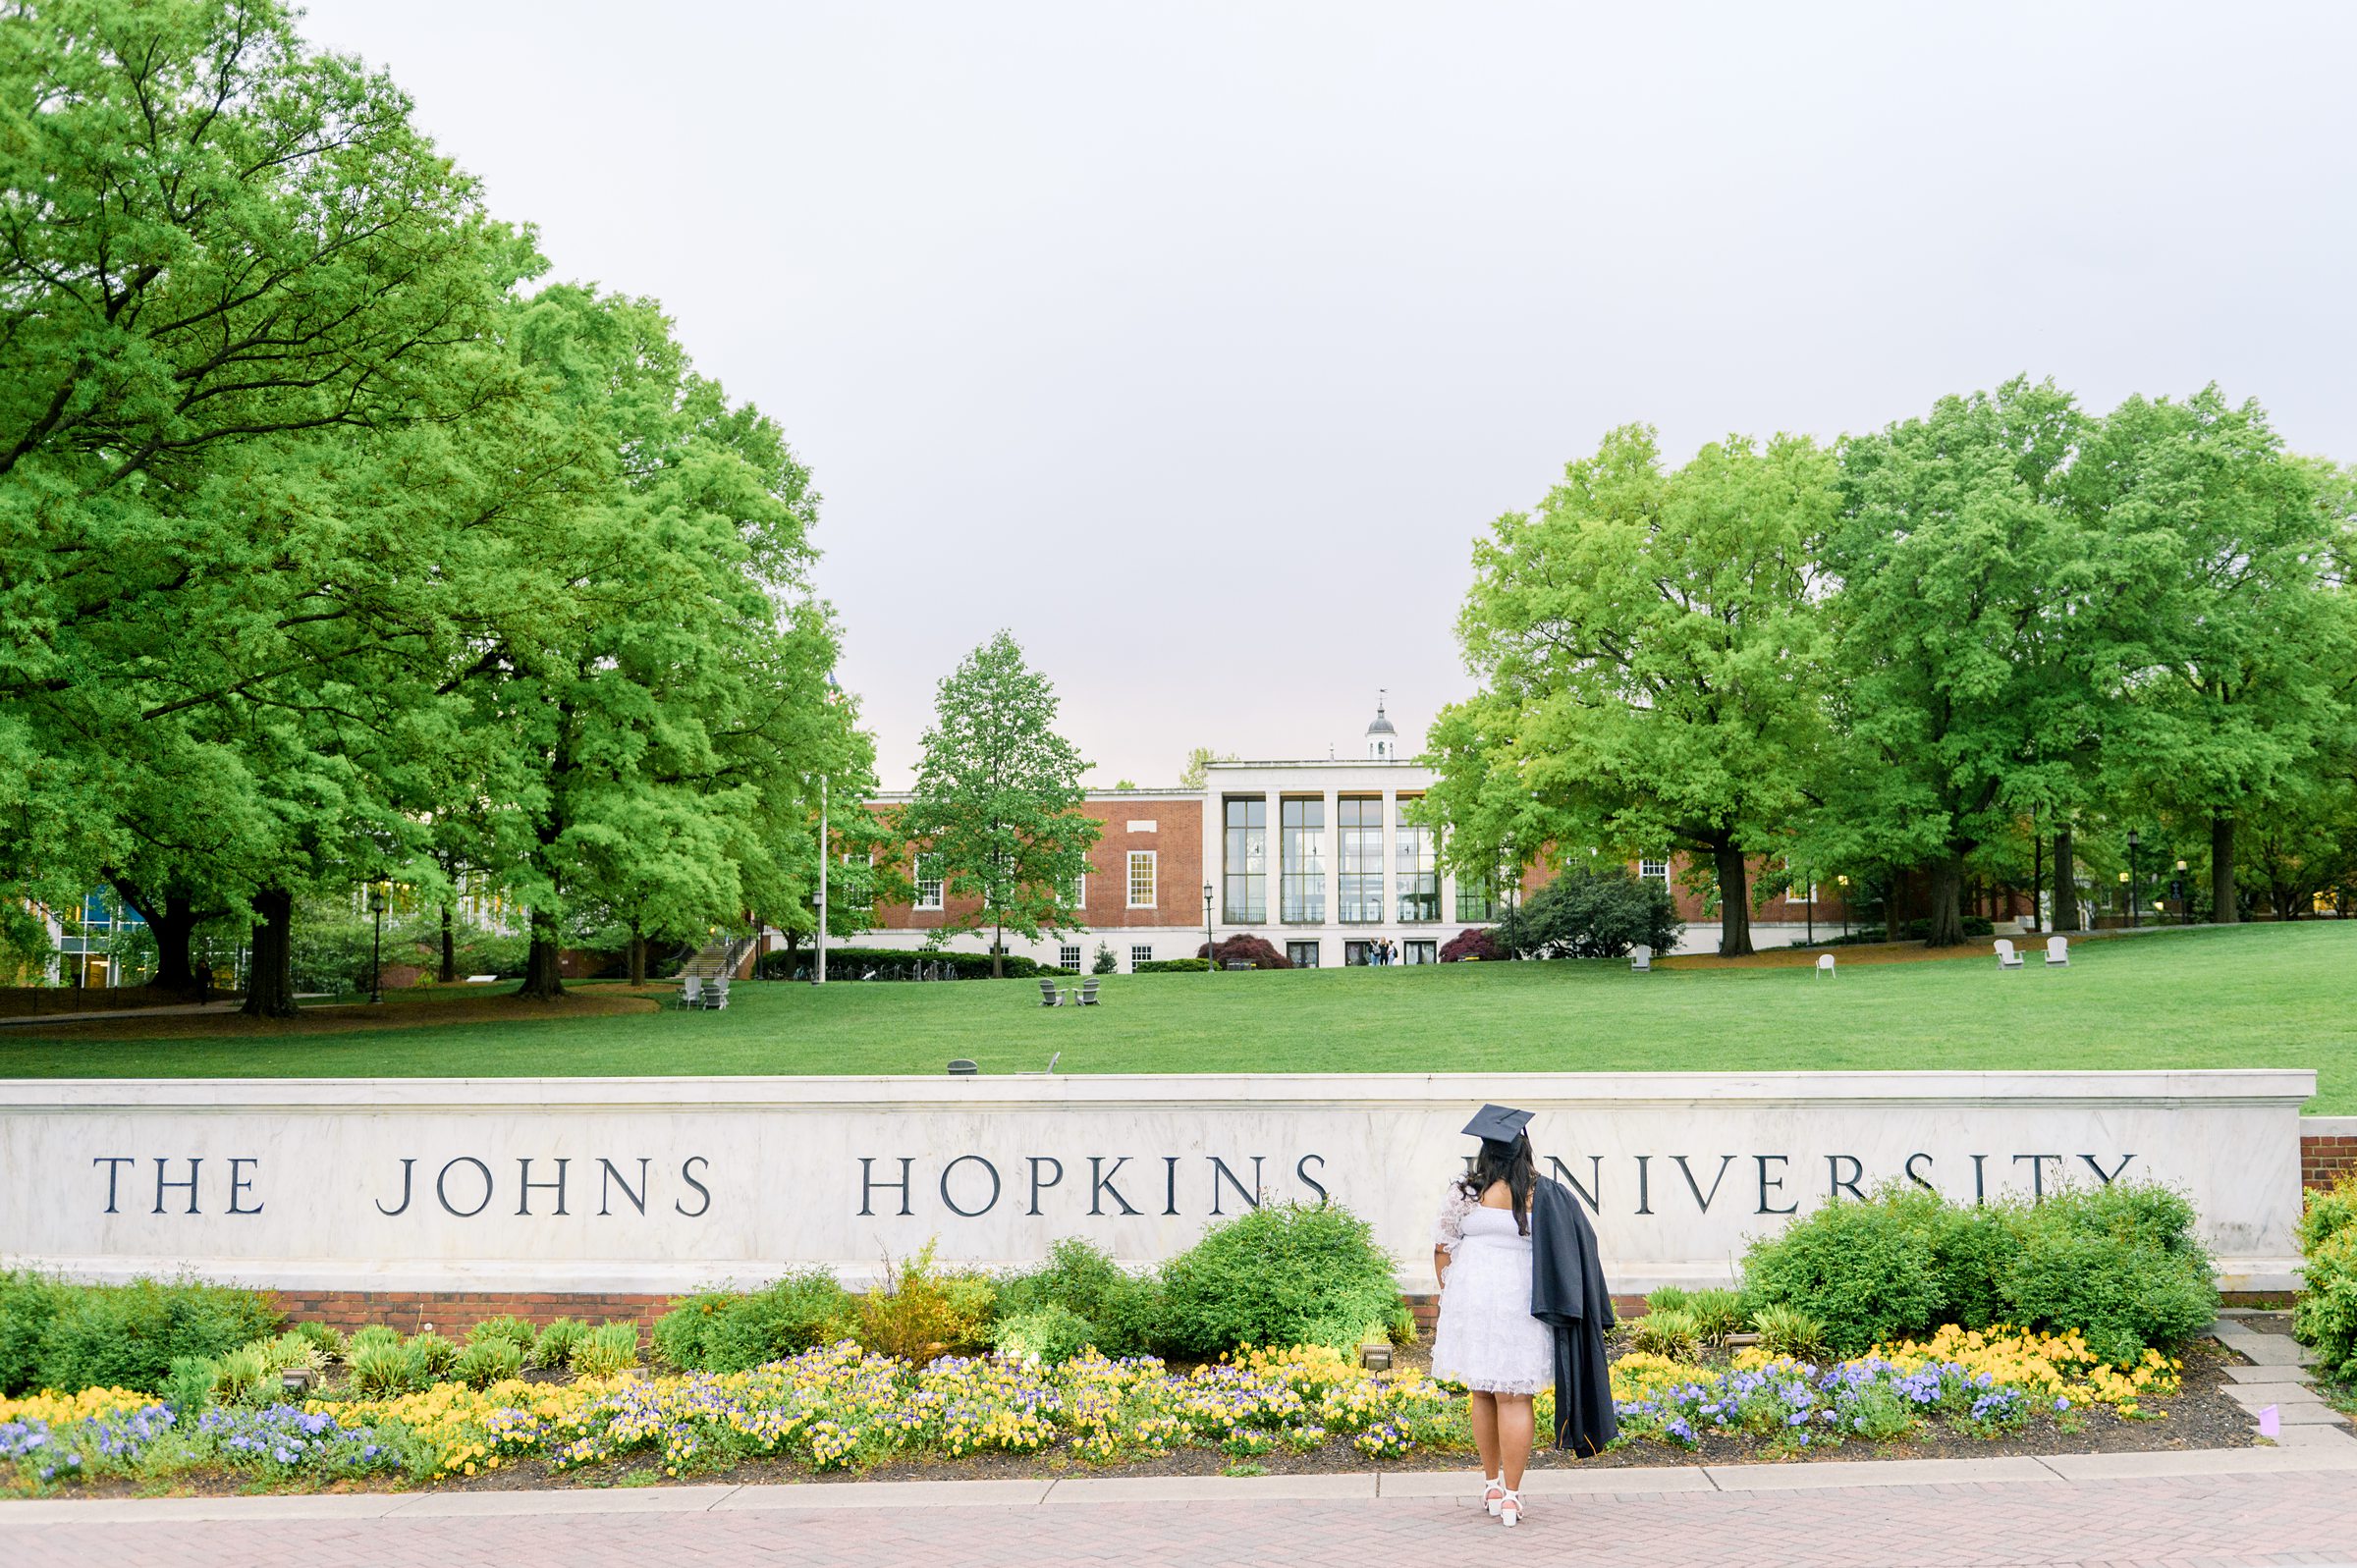 Johns Hopkins University Senior Photos in Baltimore, Maryland photographed by Baltimore Photographer Cait Kramer